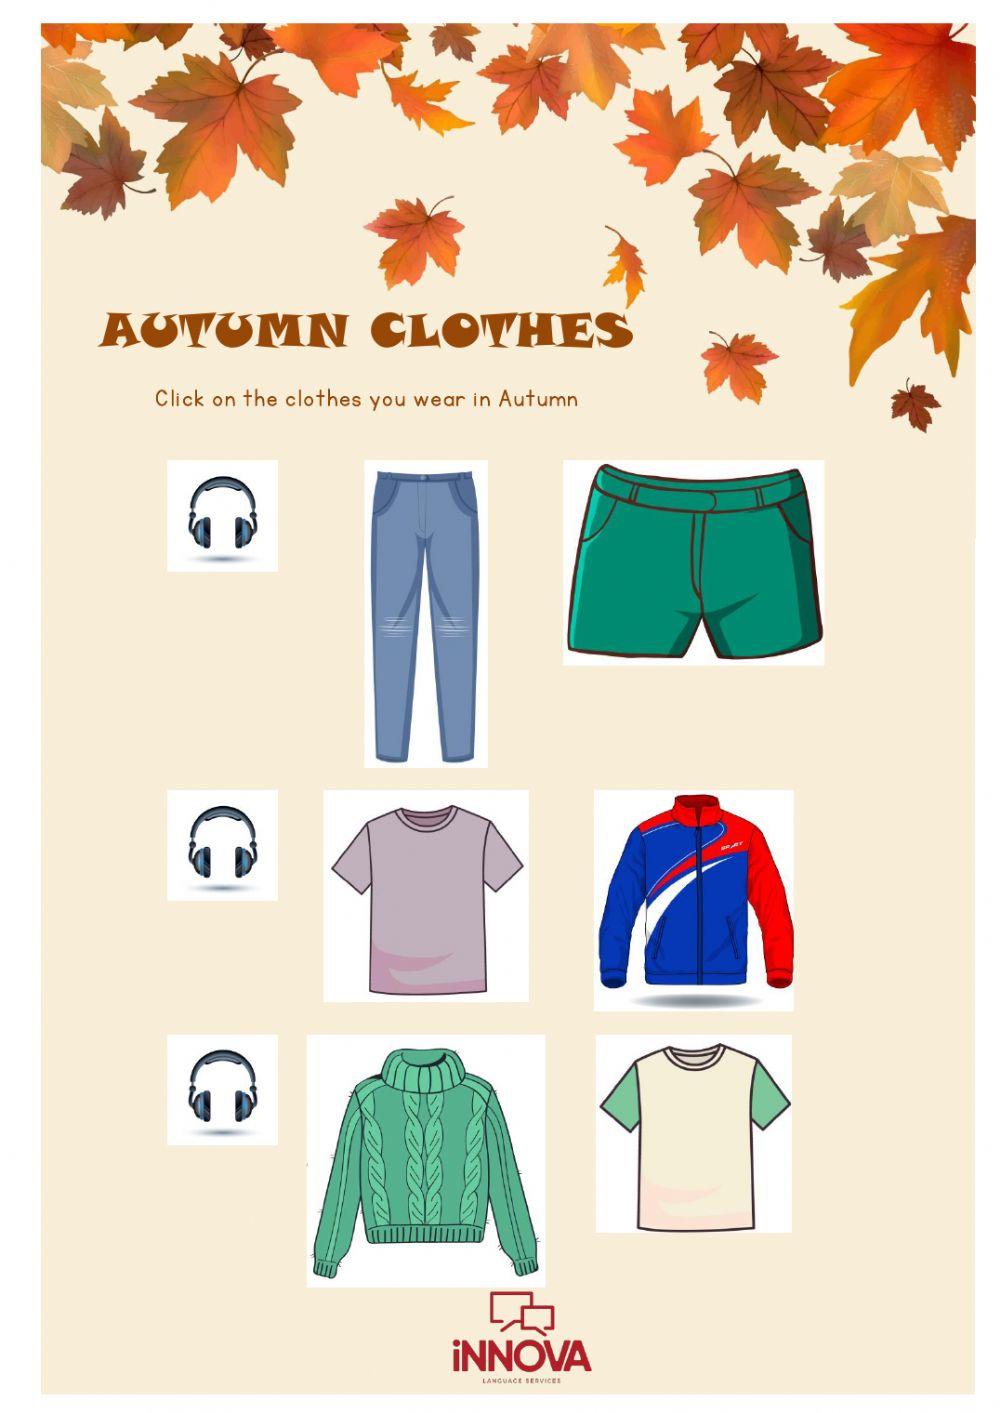 Autumn clothes